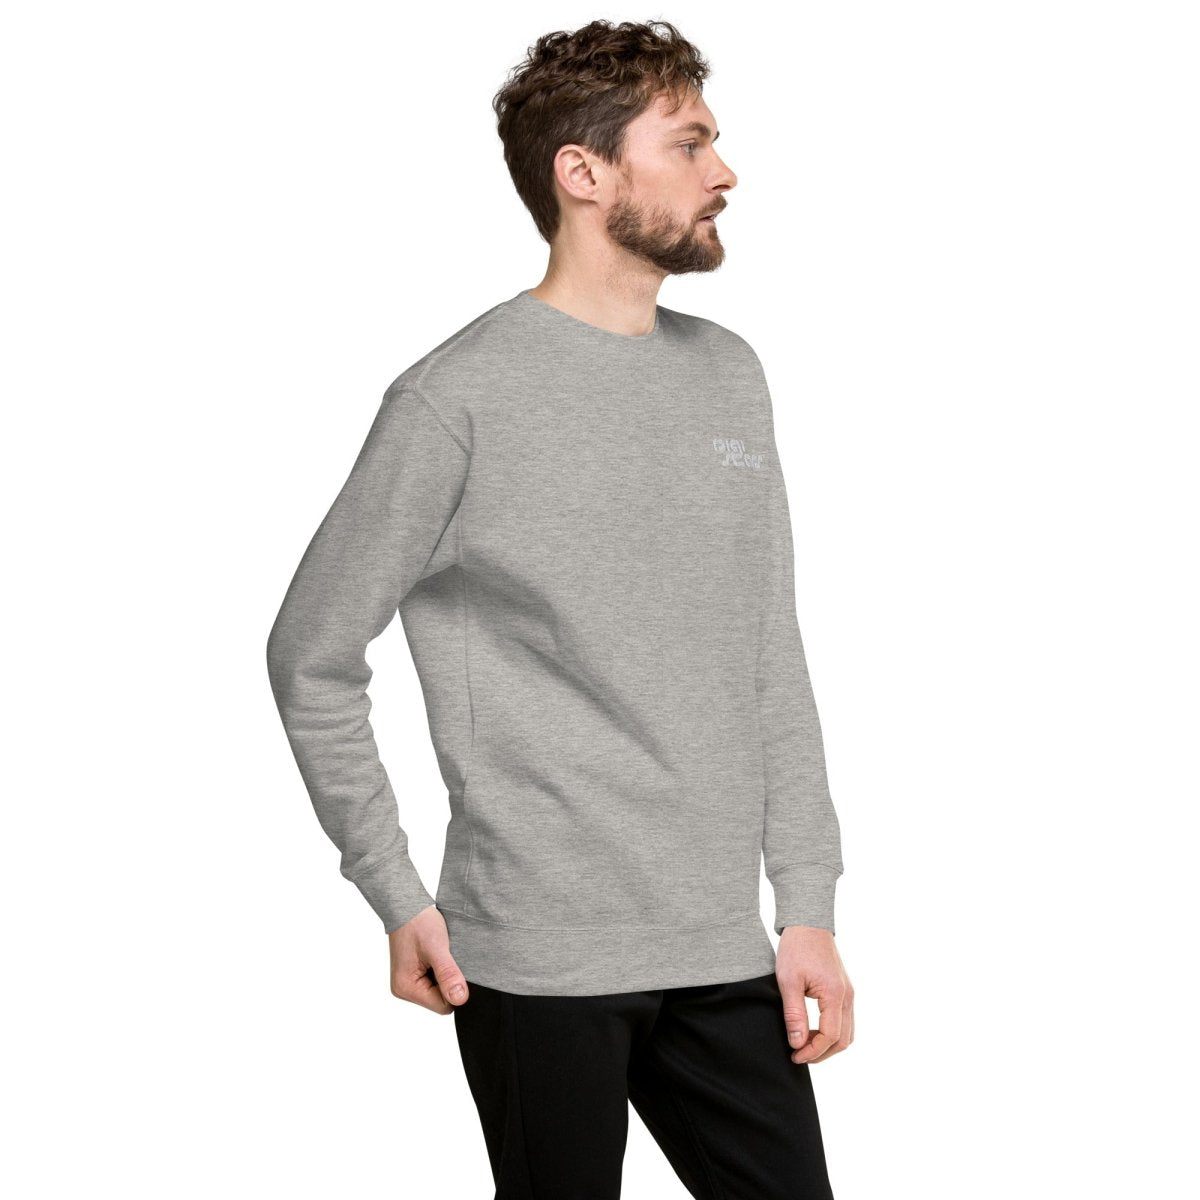 Unisex Premium Sweatshirt - digistars